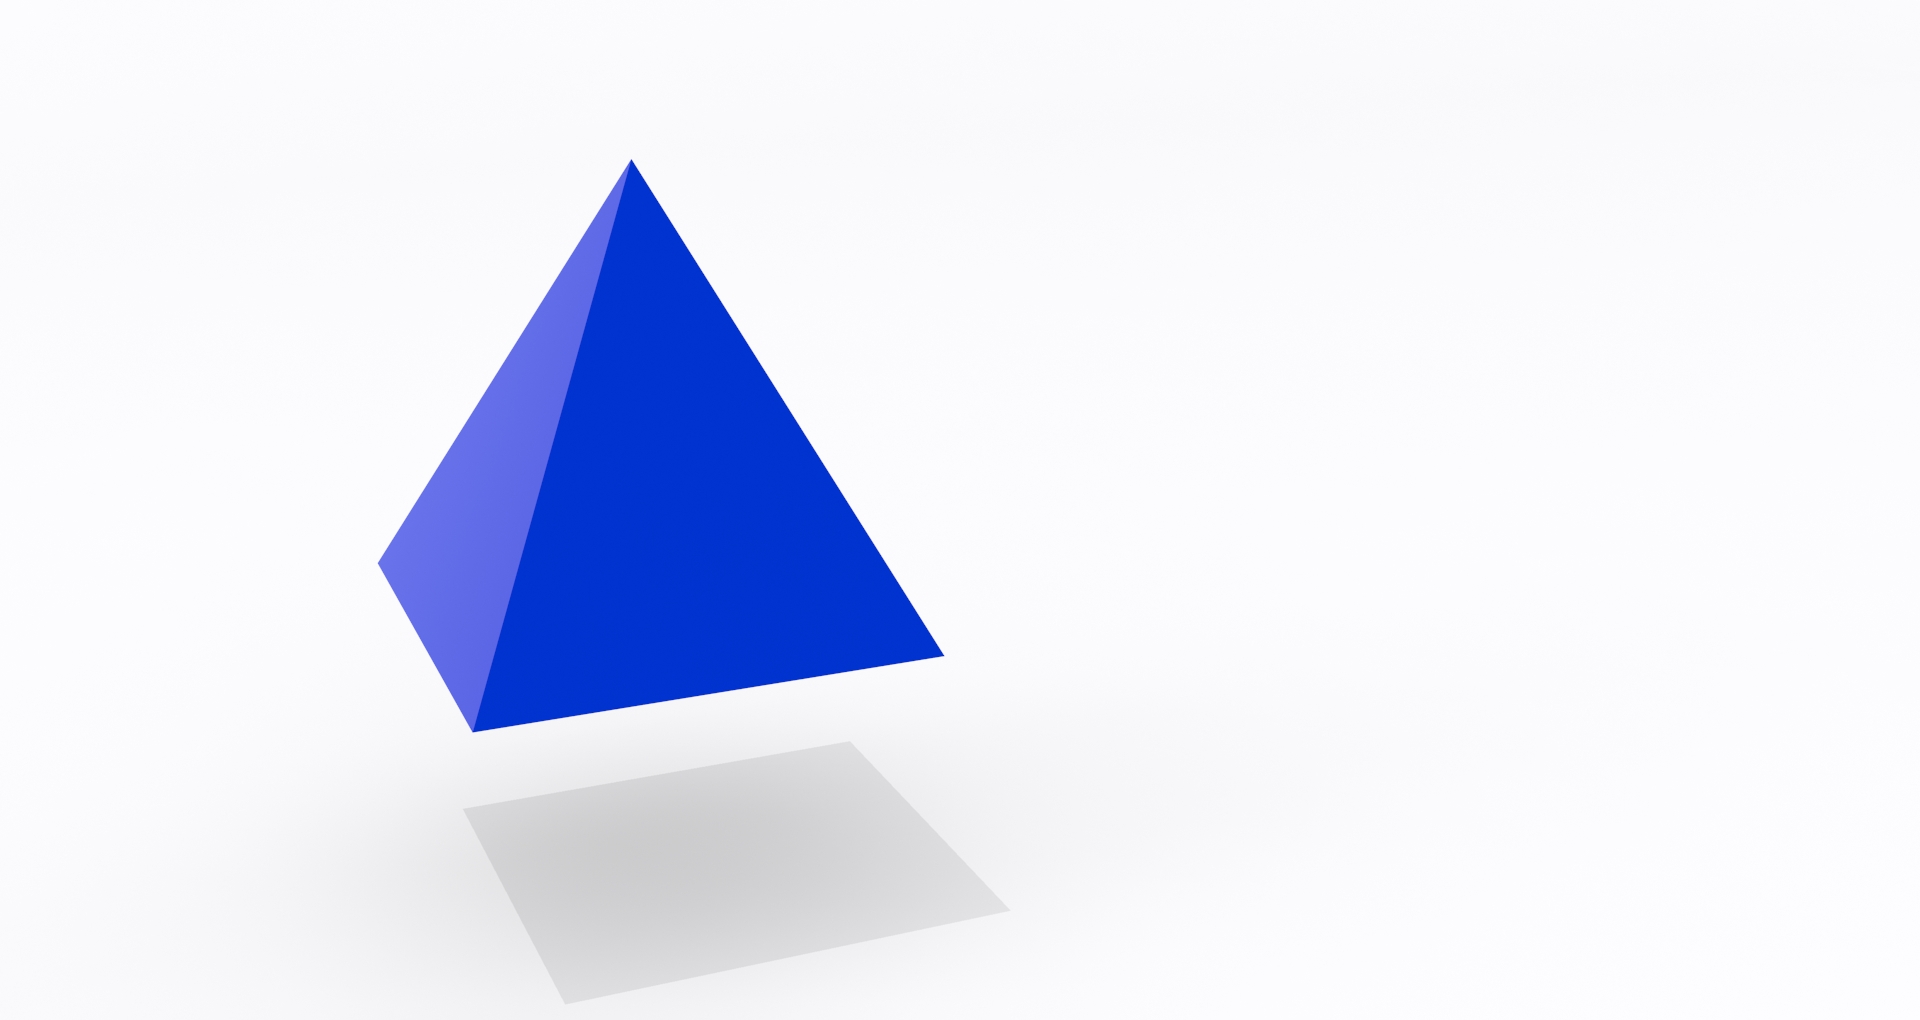 The Blue Pyramid